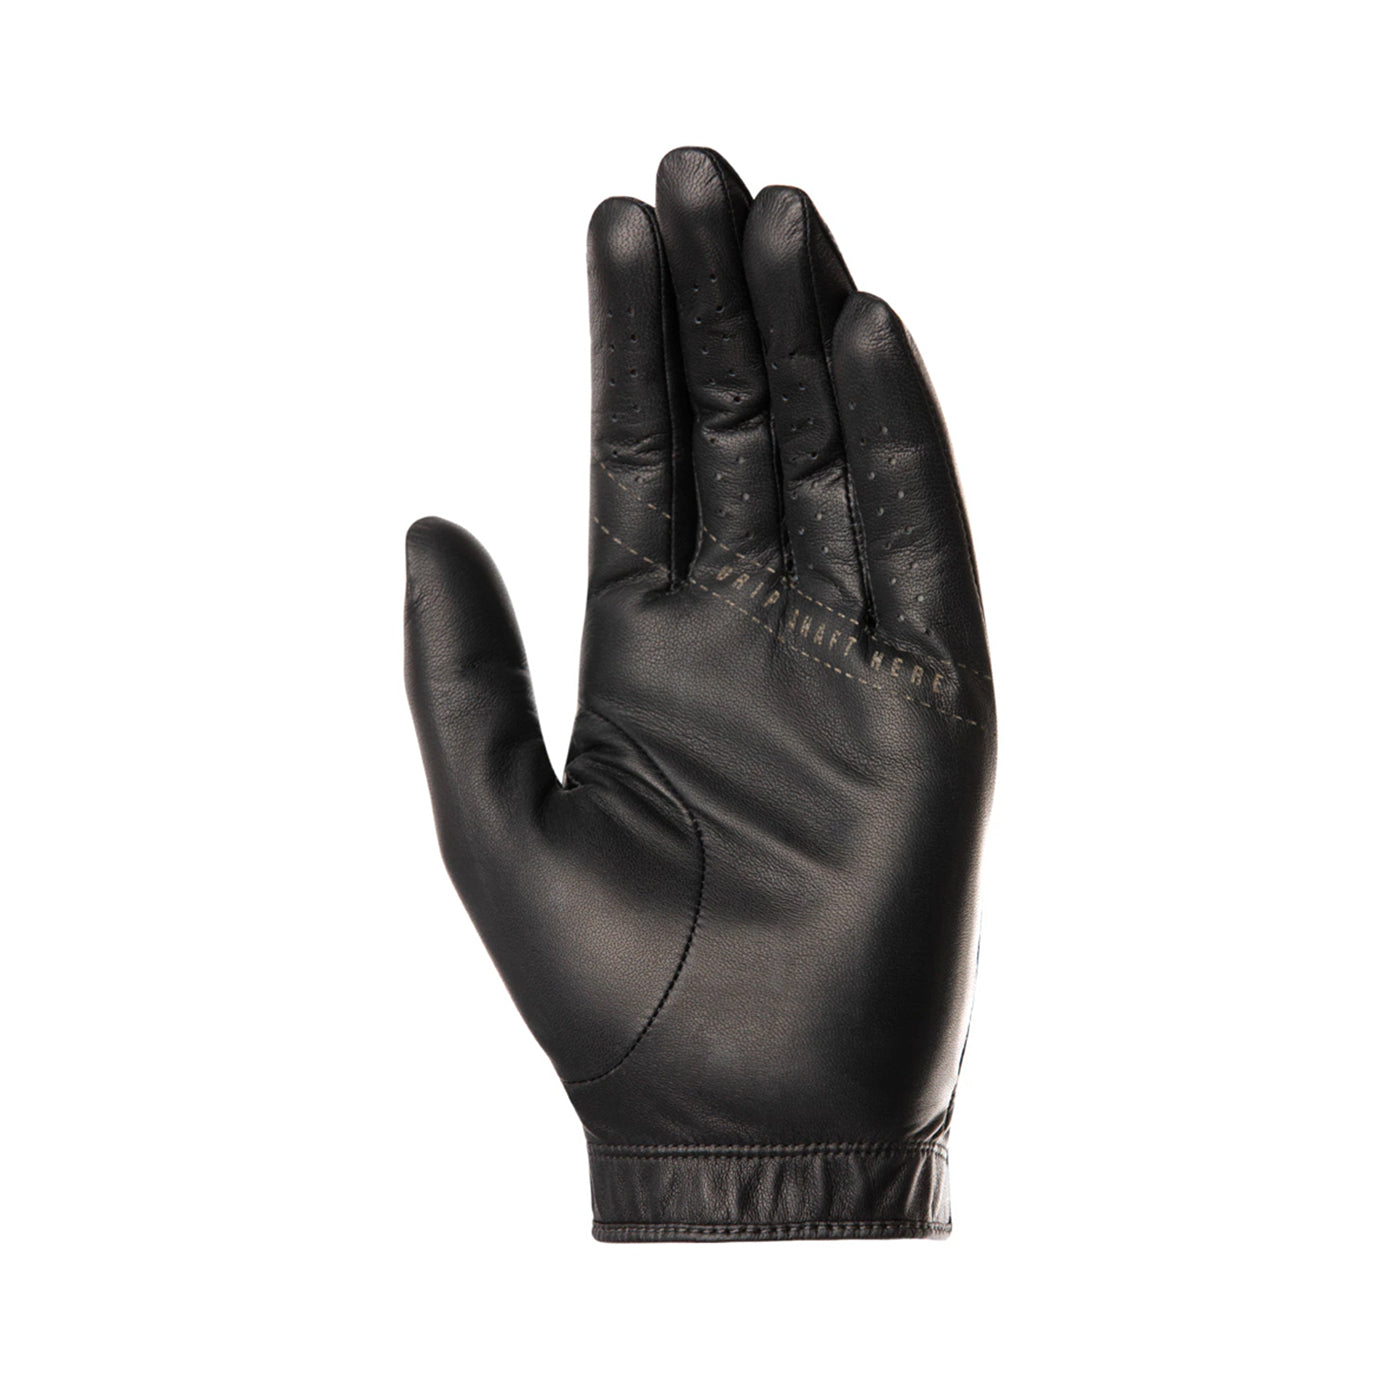 cuater-golf-nerd-fingers-glove-mlh-4mt073-black